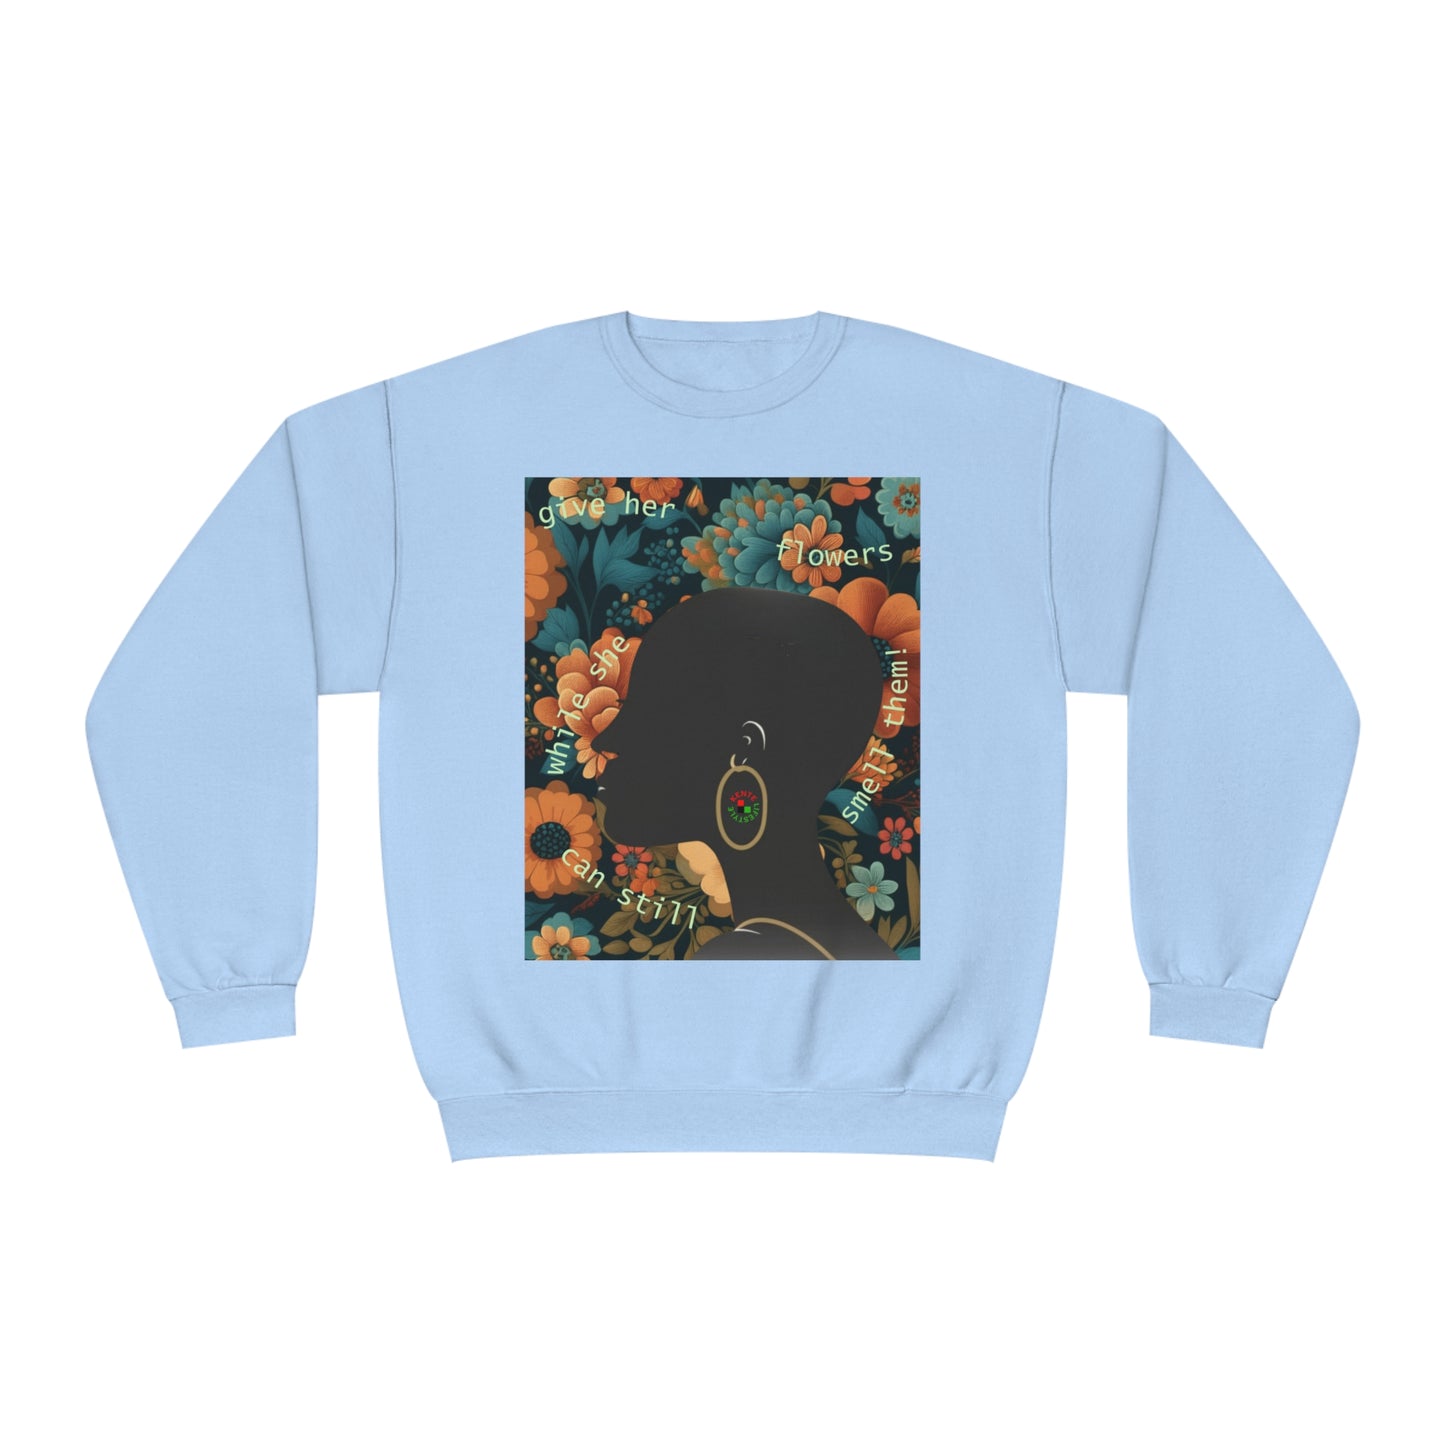 Give Her Flowers... - Sweatshirt